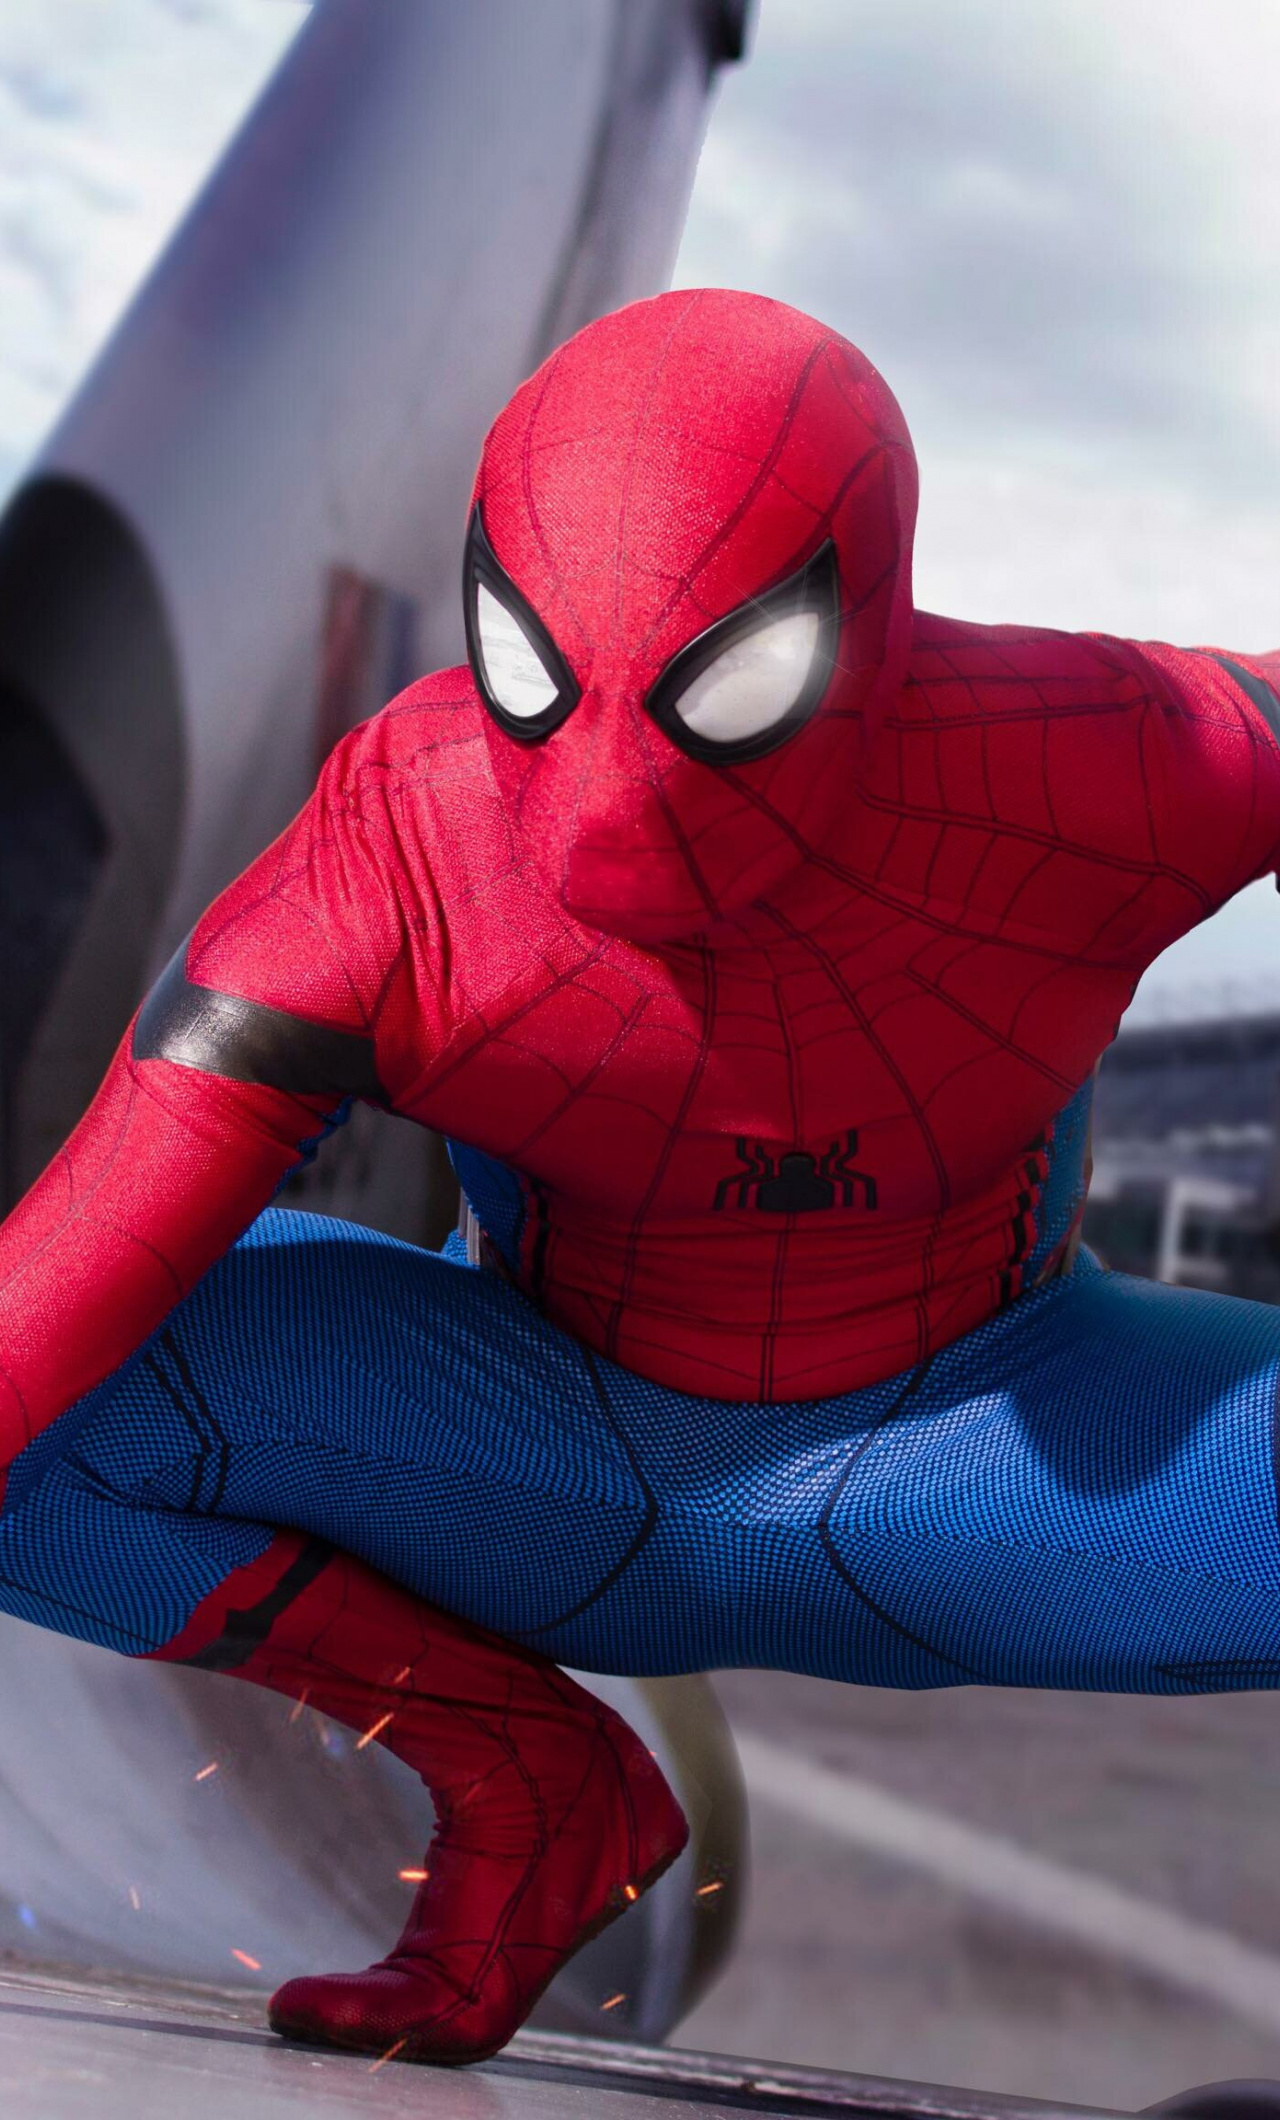 Download Spider Man, Movie, Captain America: Civil War Wallpaper, 1280x IPhone 6 Plus